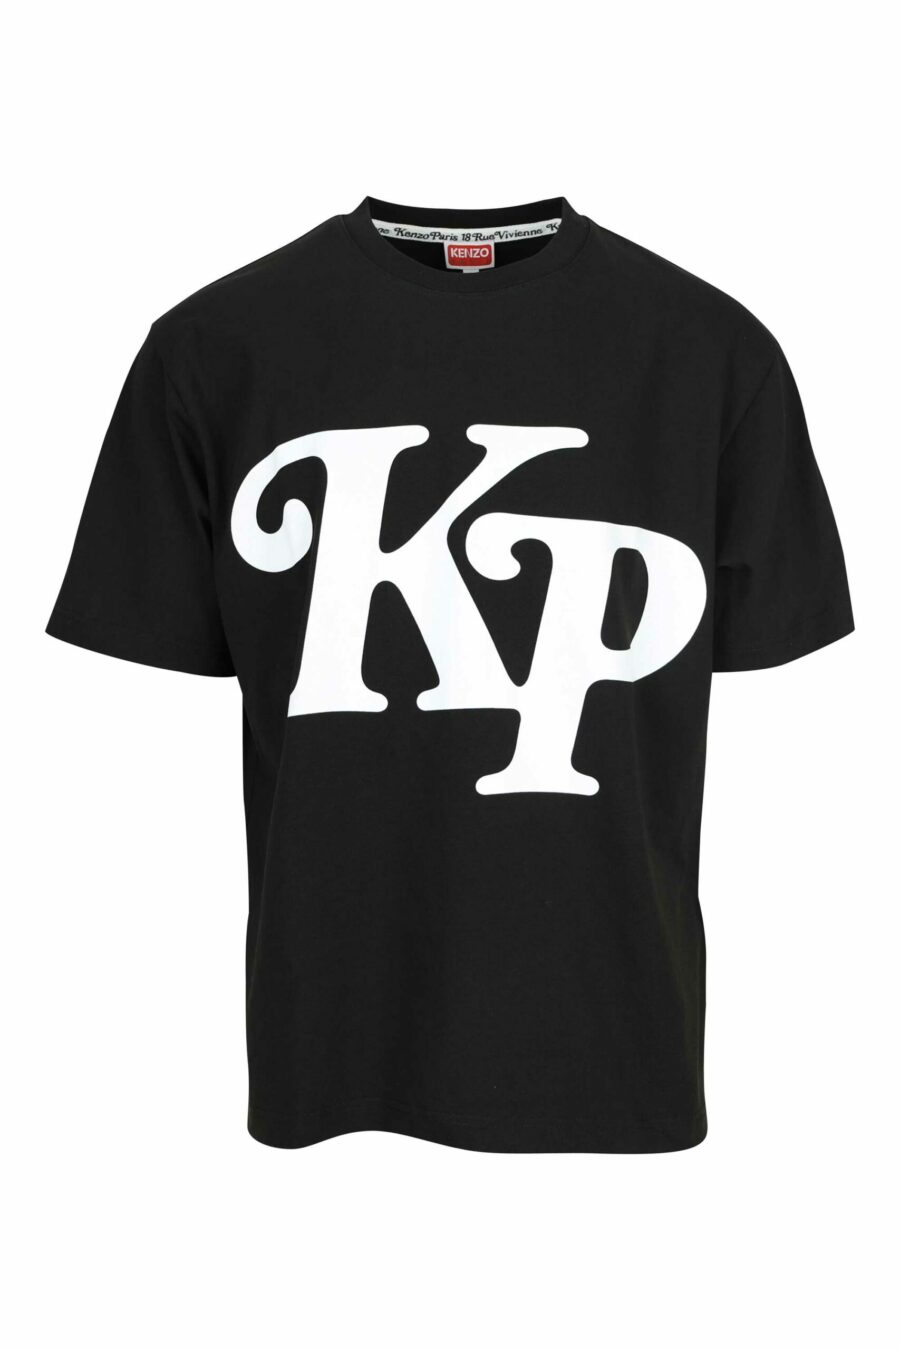 T-shirt oversize noir avec maxilogo "kenzo by verdy" - 3612230623798 scaled